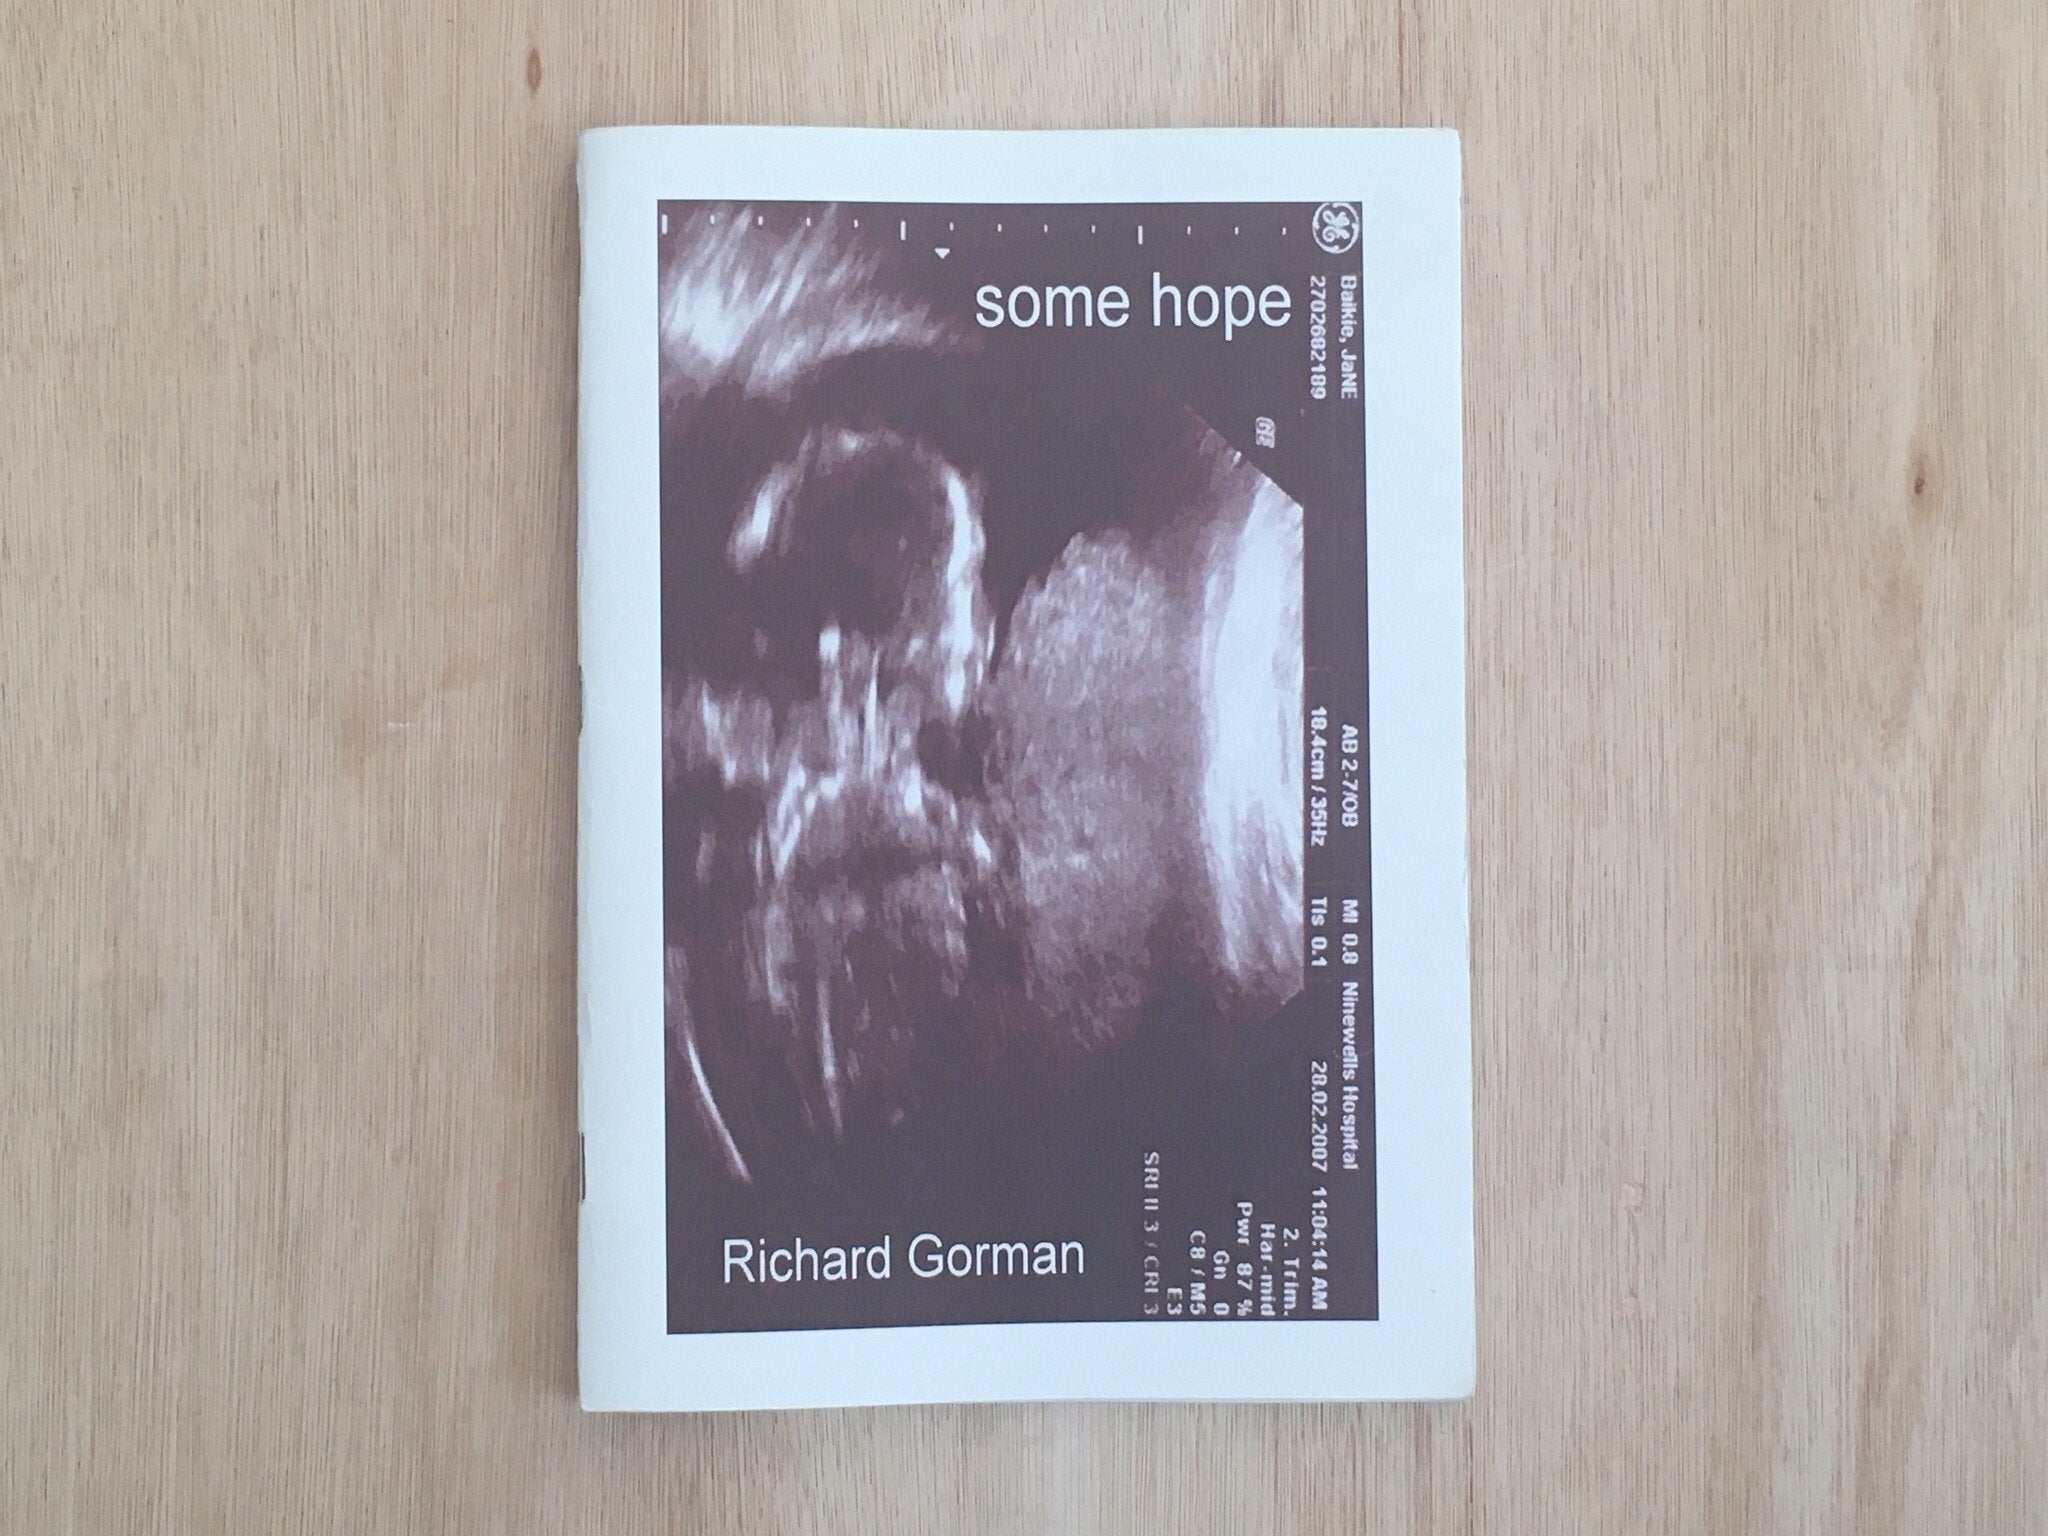 SOME HOPE by Richard Gorman